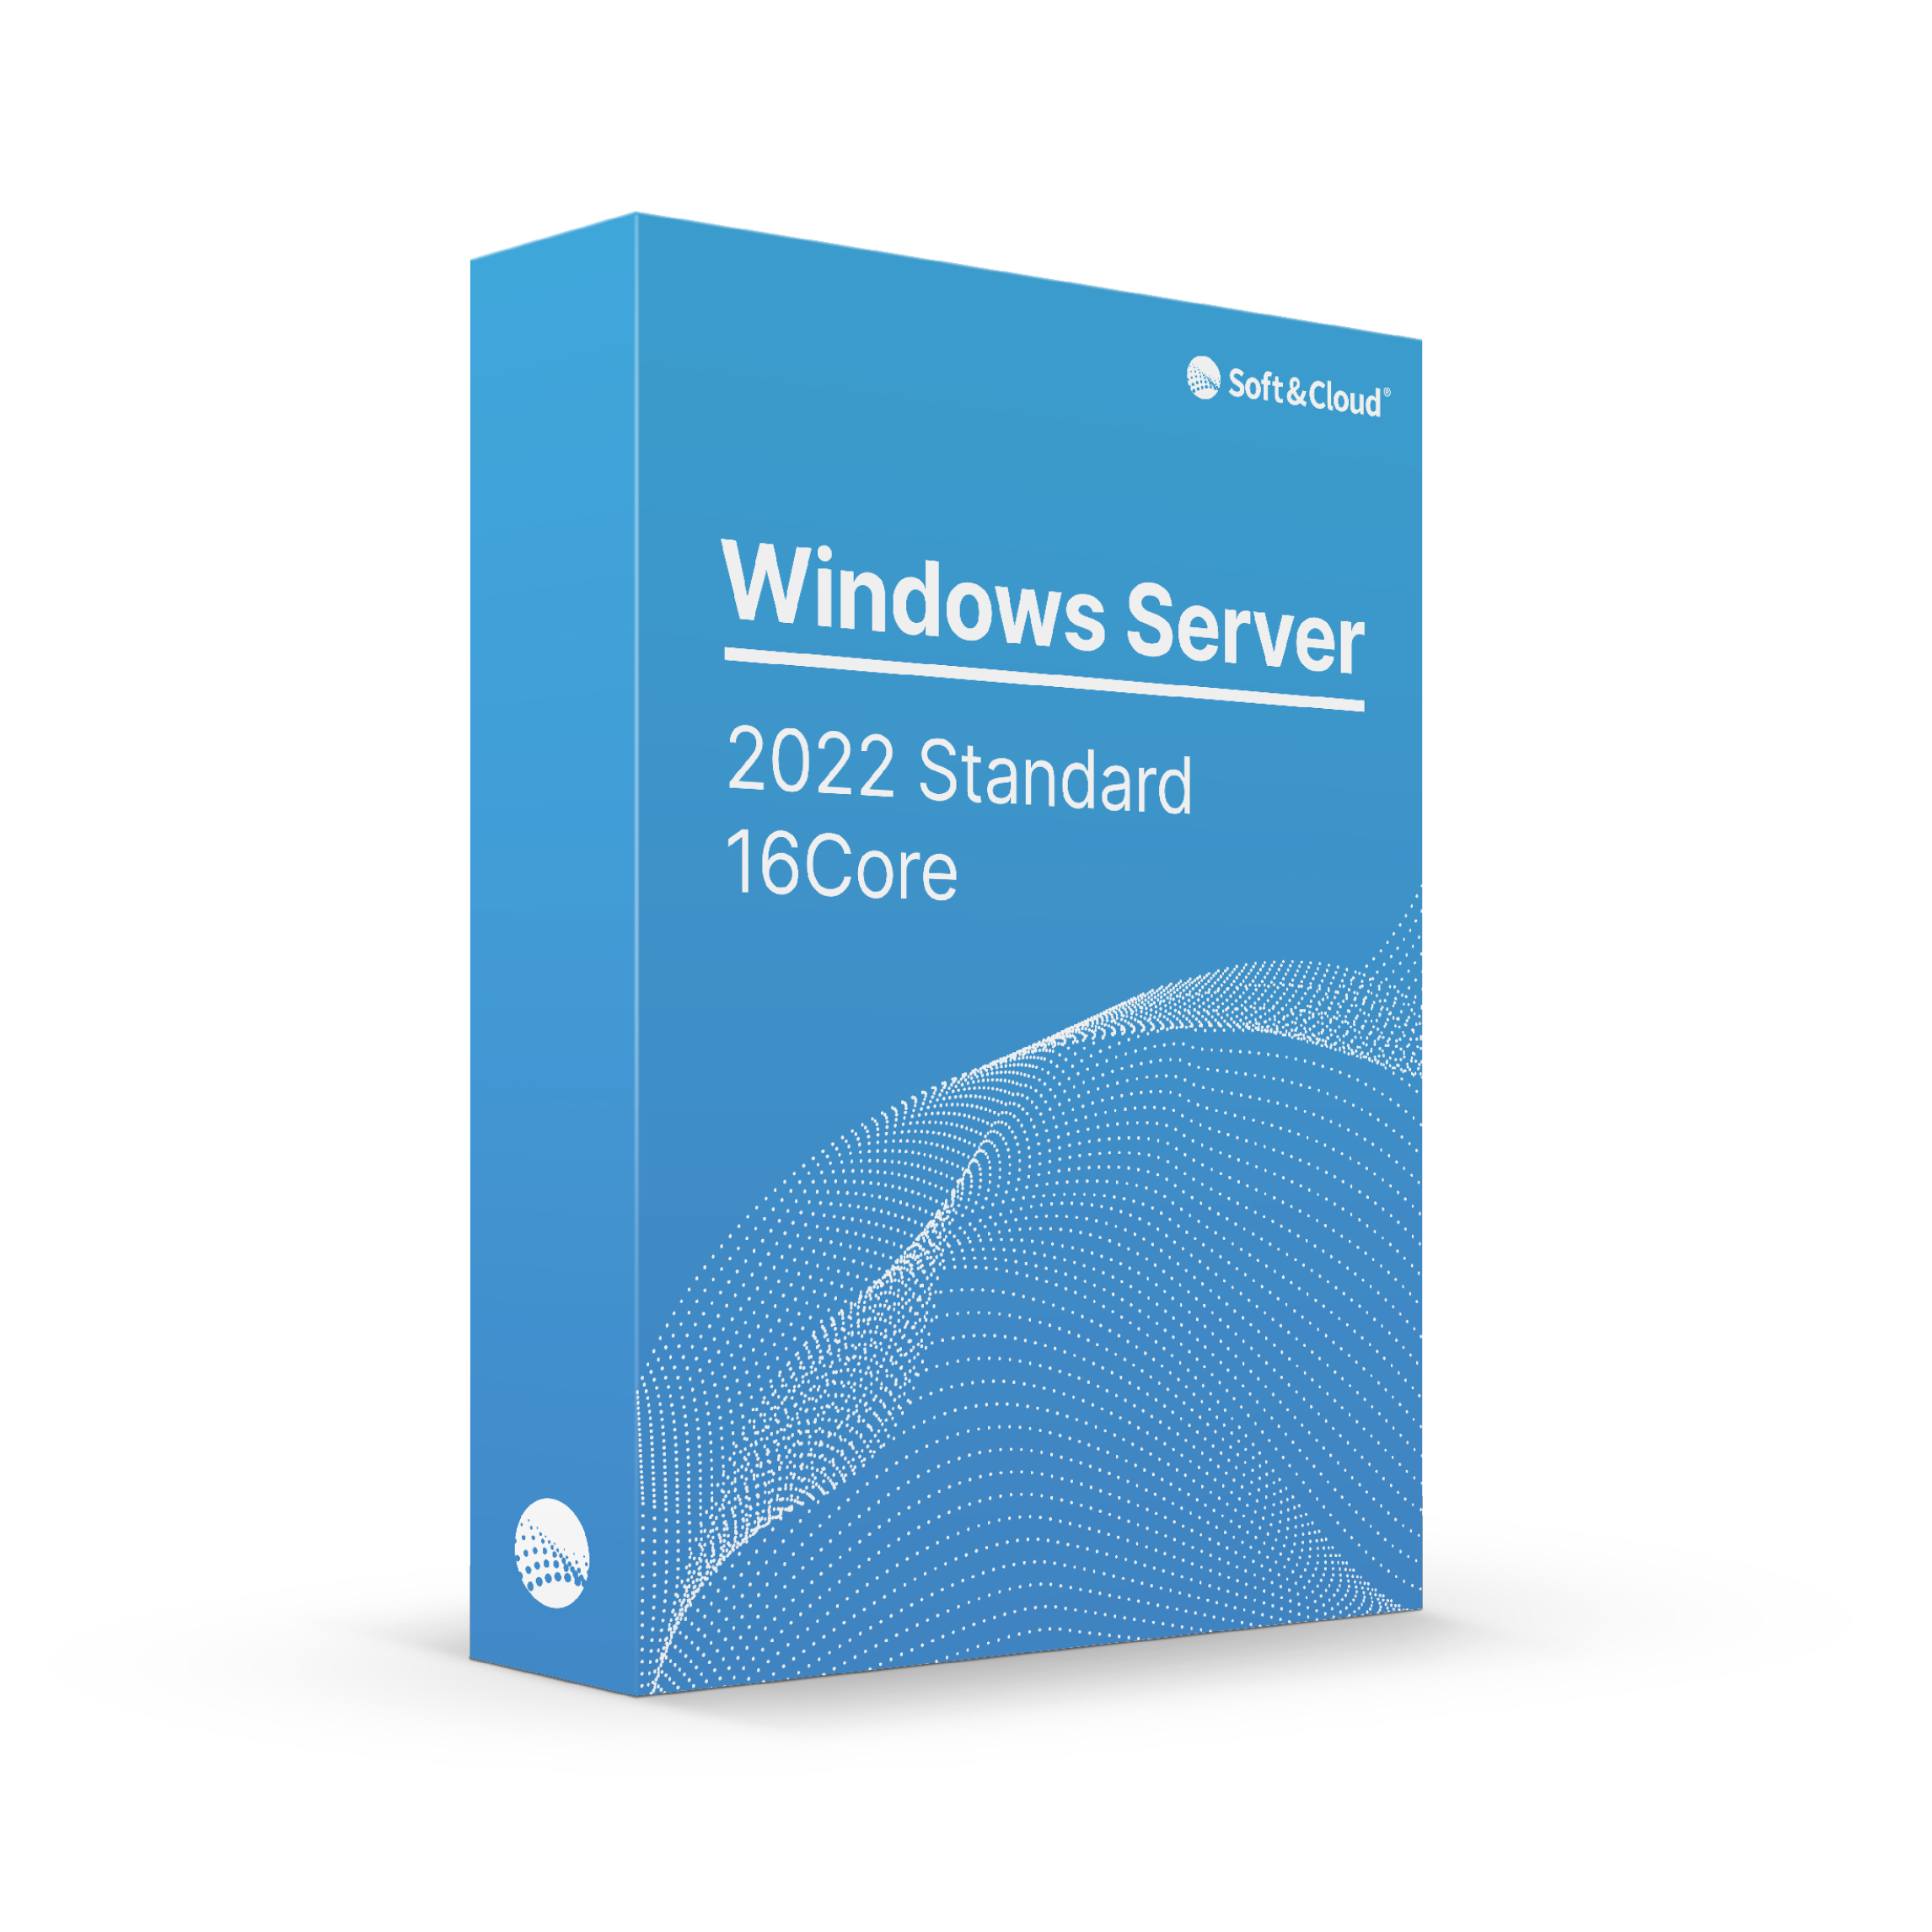 Windows Server 2022 Standard 16Core